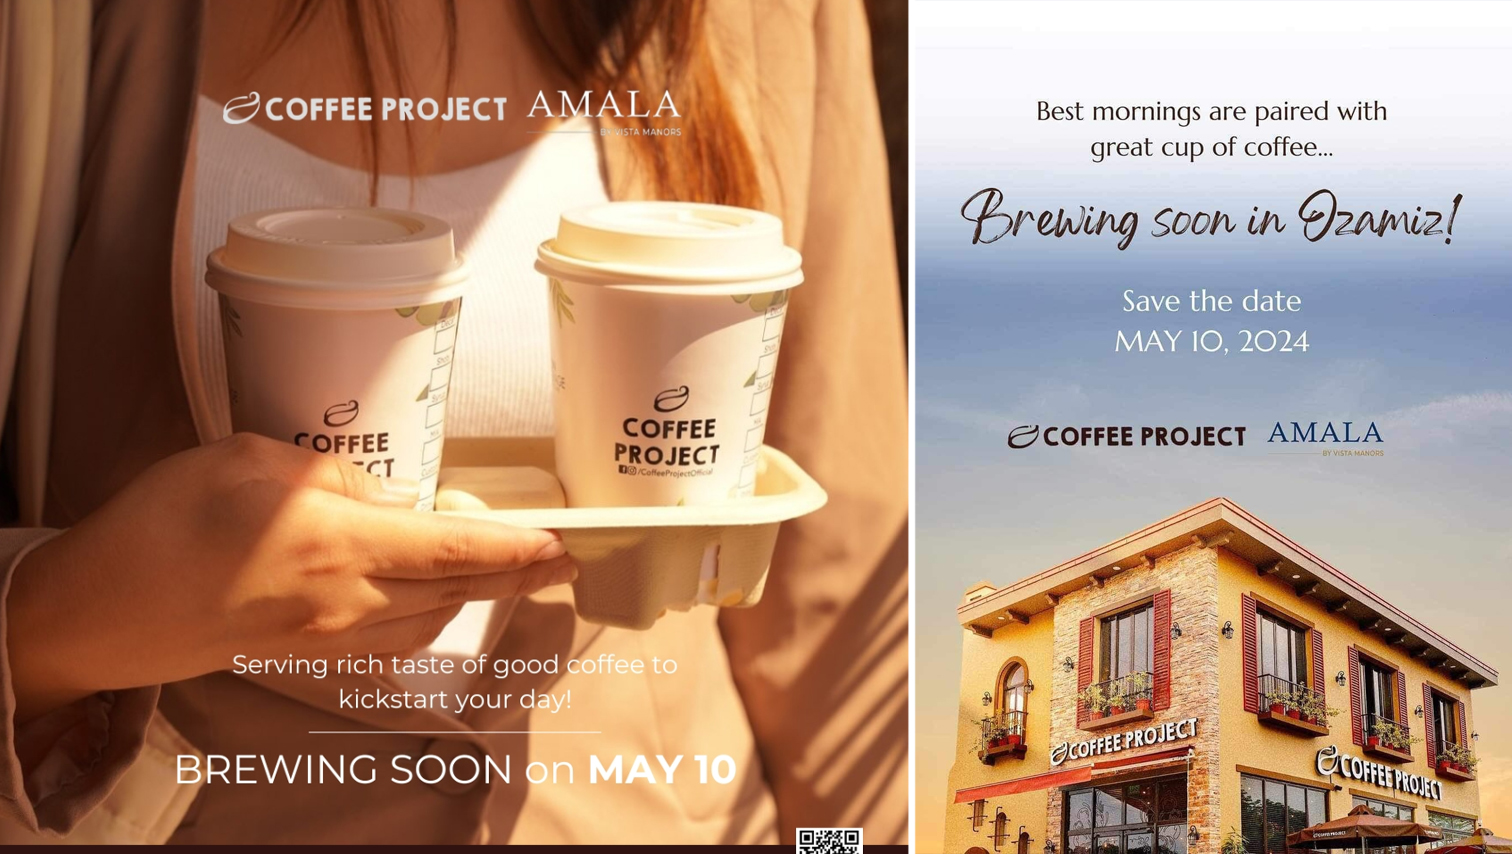 Coffee Project Amala in Ozamiz opens May 10